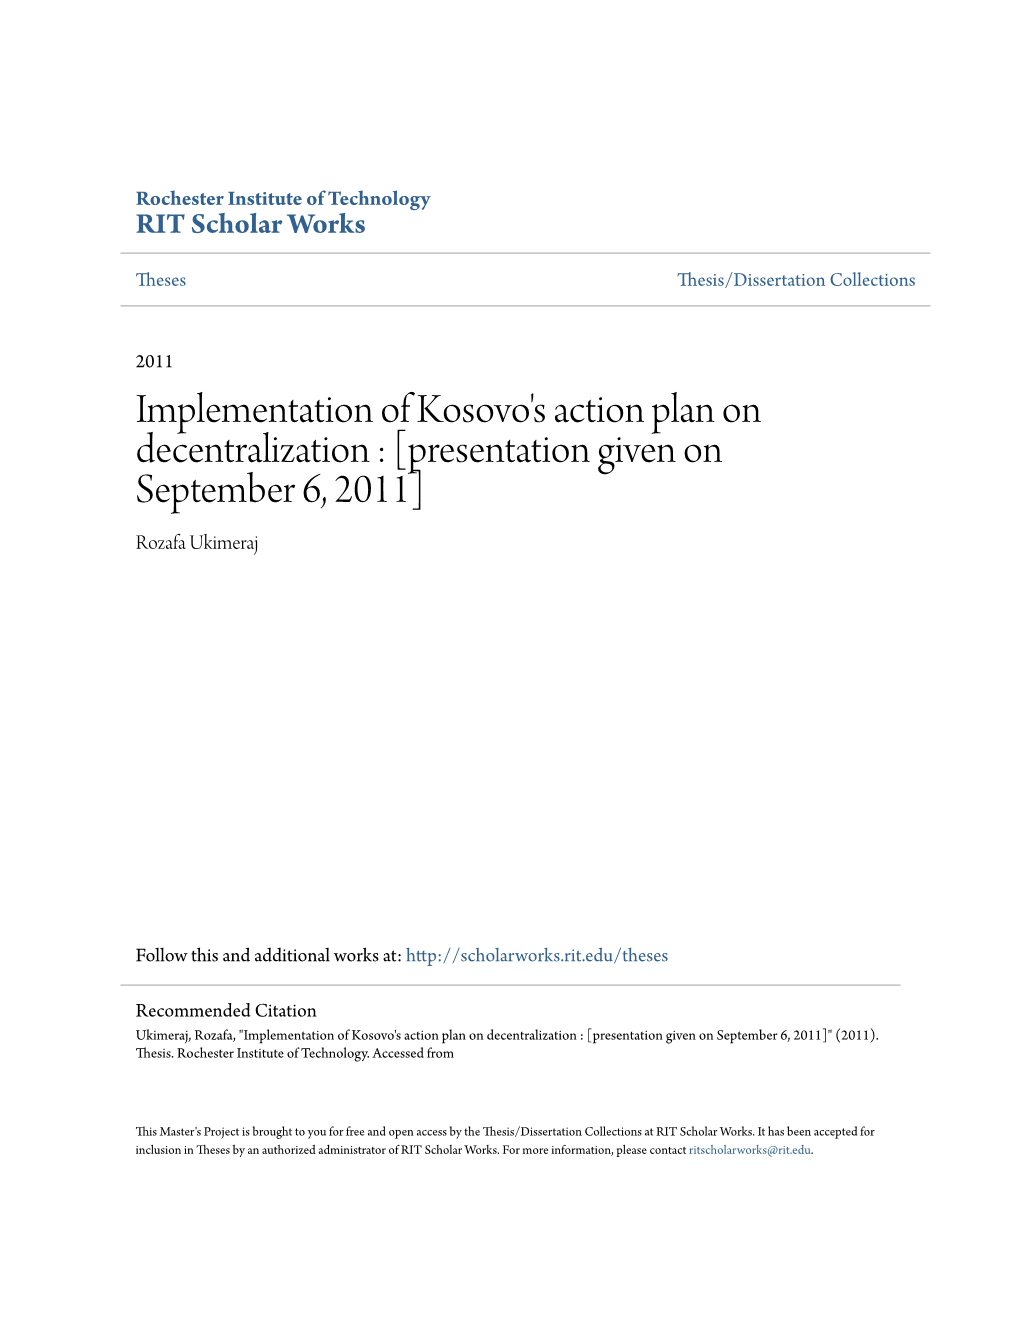 Implementation of Kosovo's Action Plan on Decentralization : [Presentation Given on September 6, 2011] Rozafa Ukimeraj